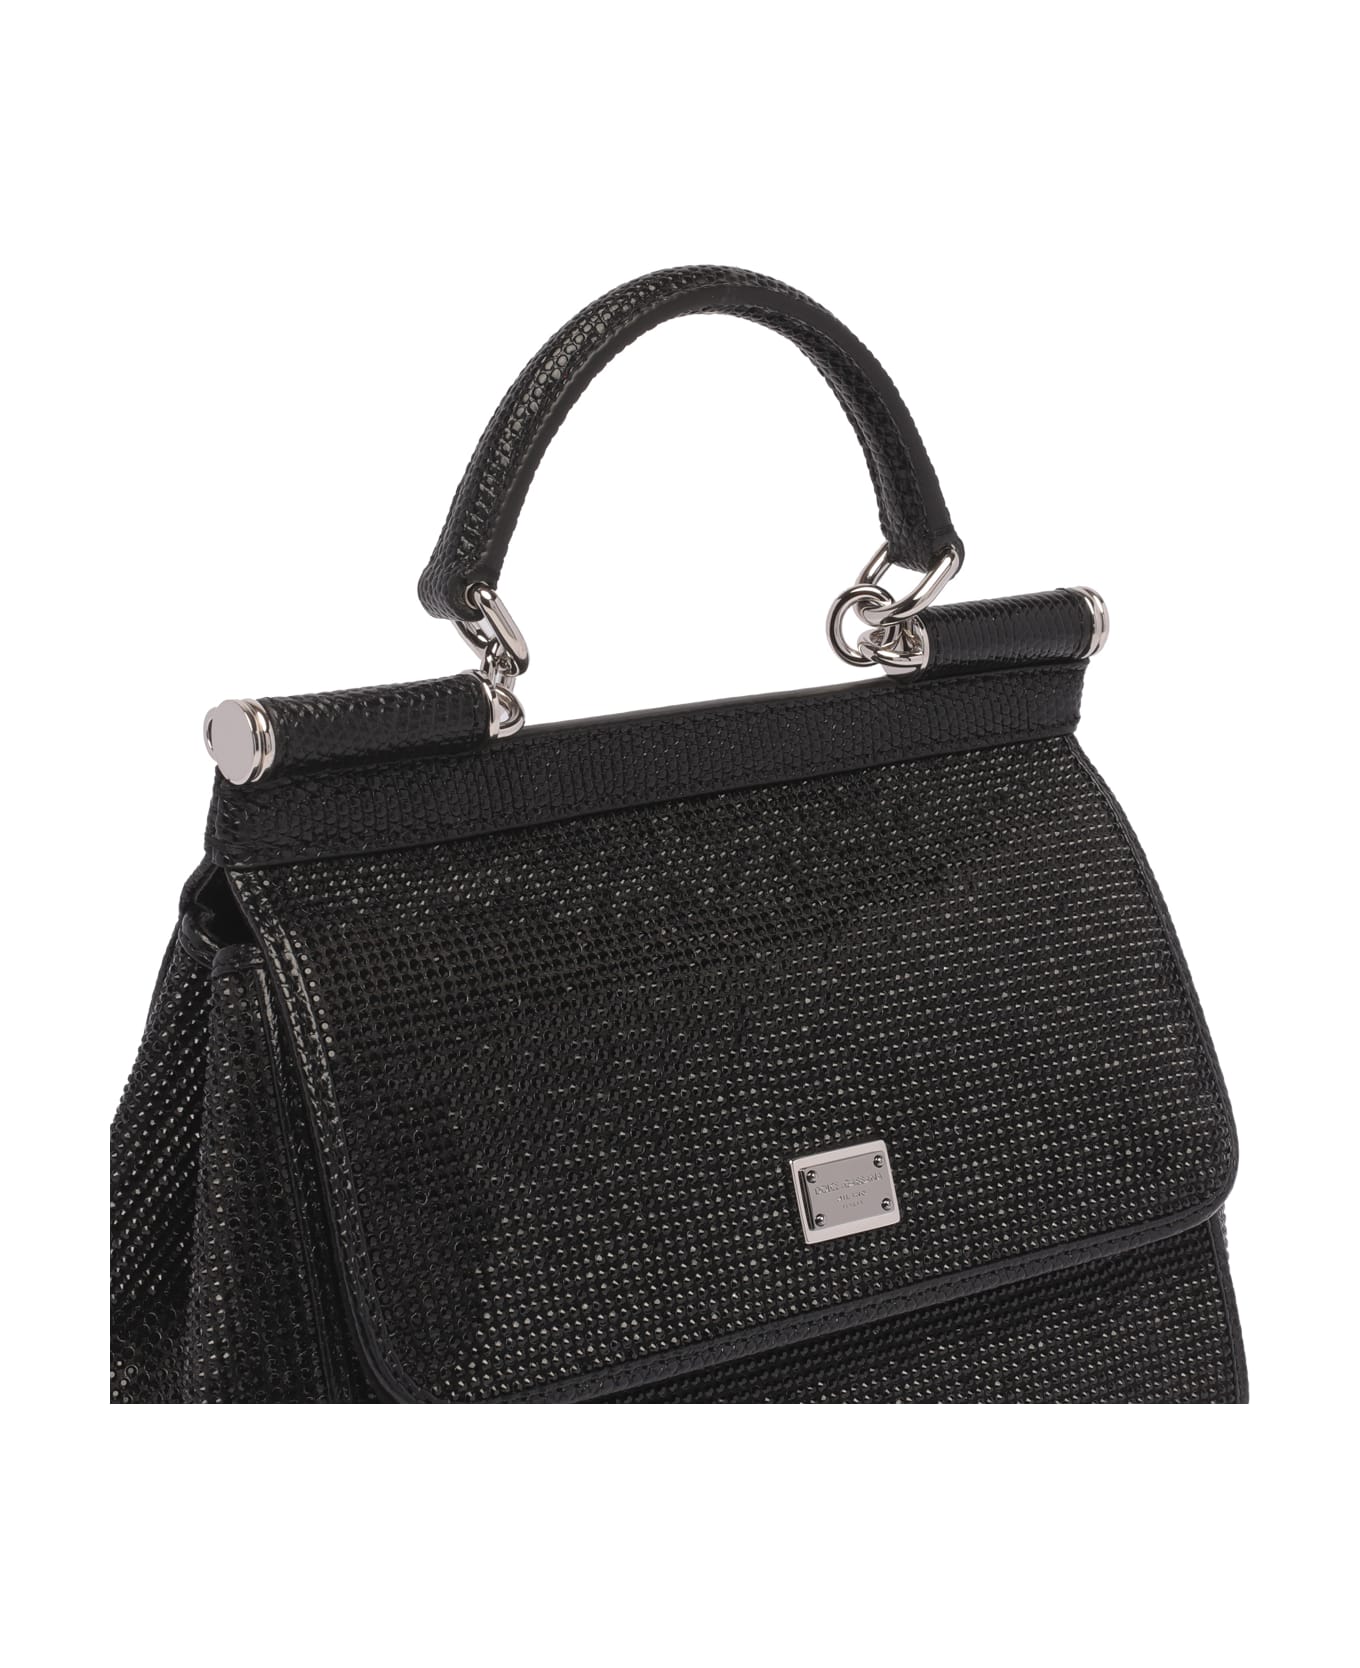 Dolce & Gabbana X Kim Sicily Small Bag - Black